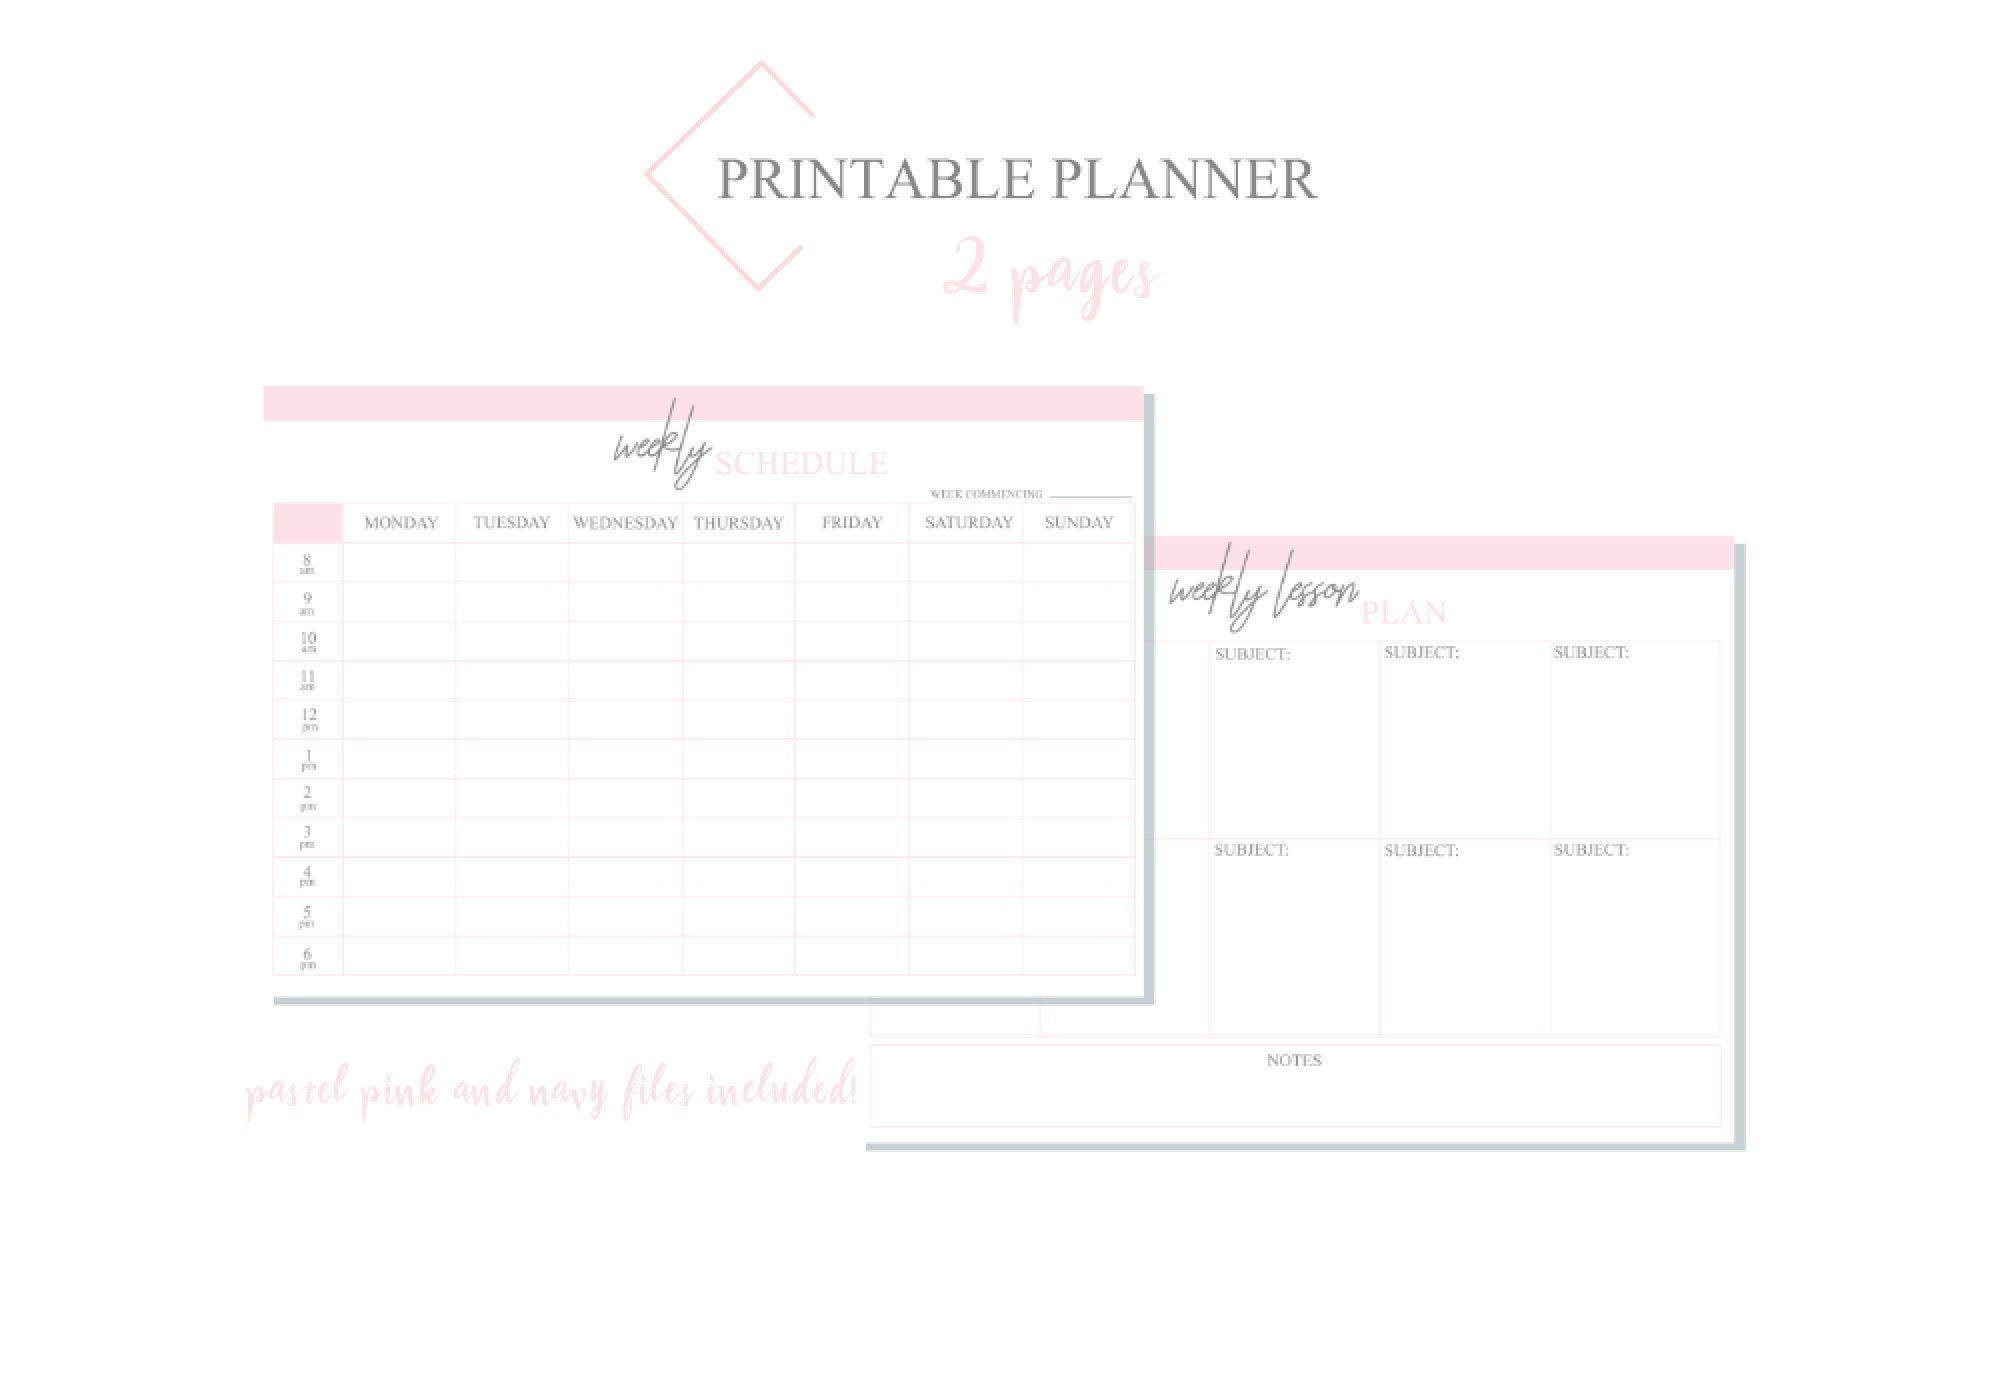 Homeschooling/Online Classes Printable Planner